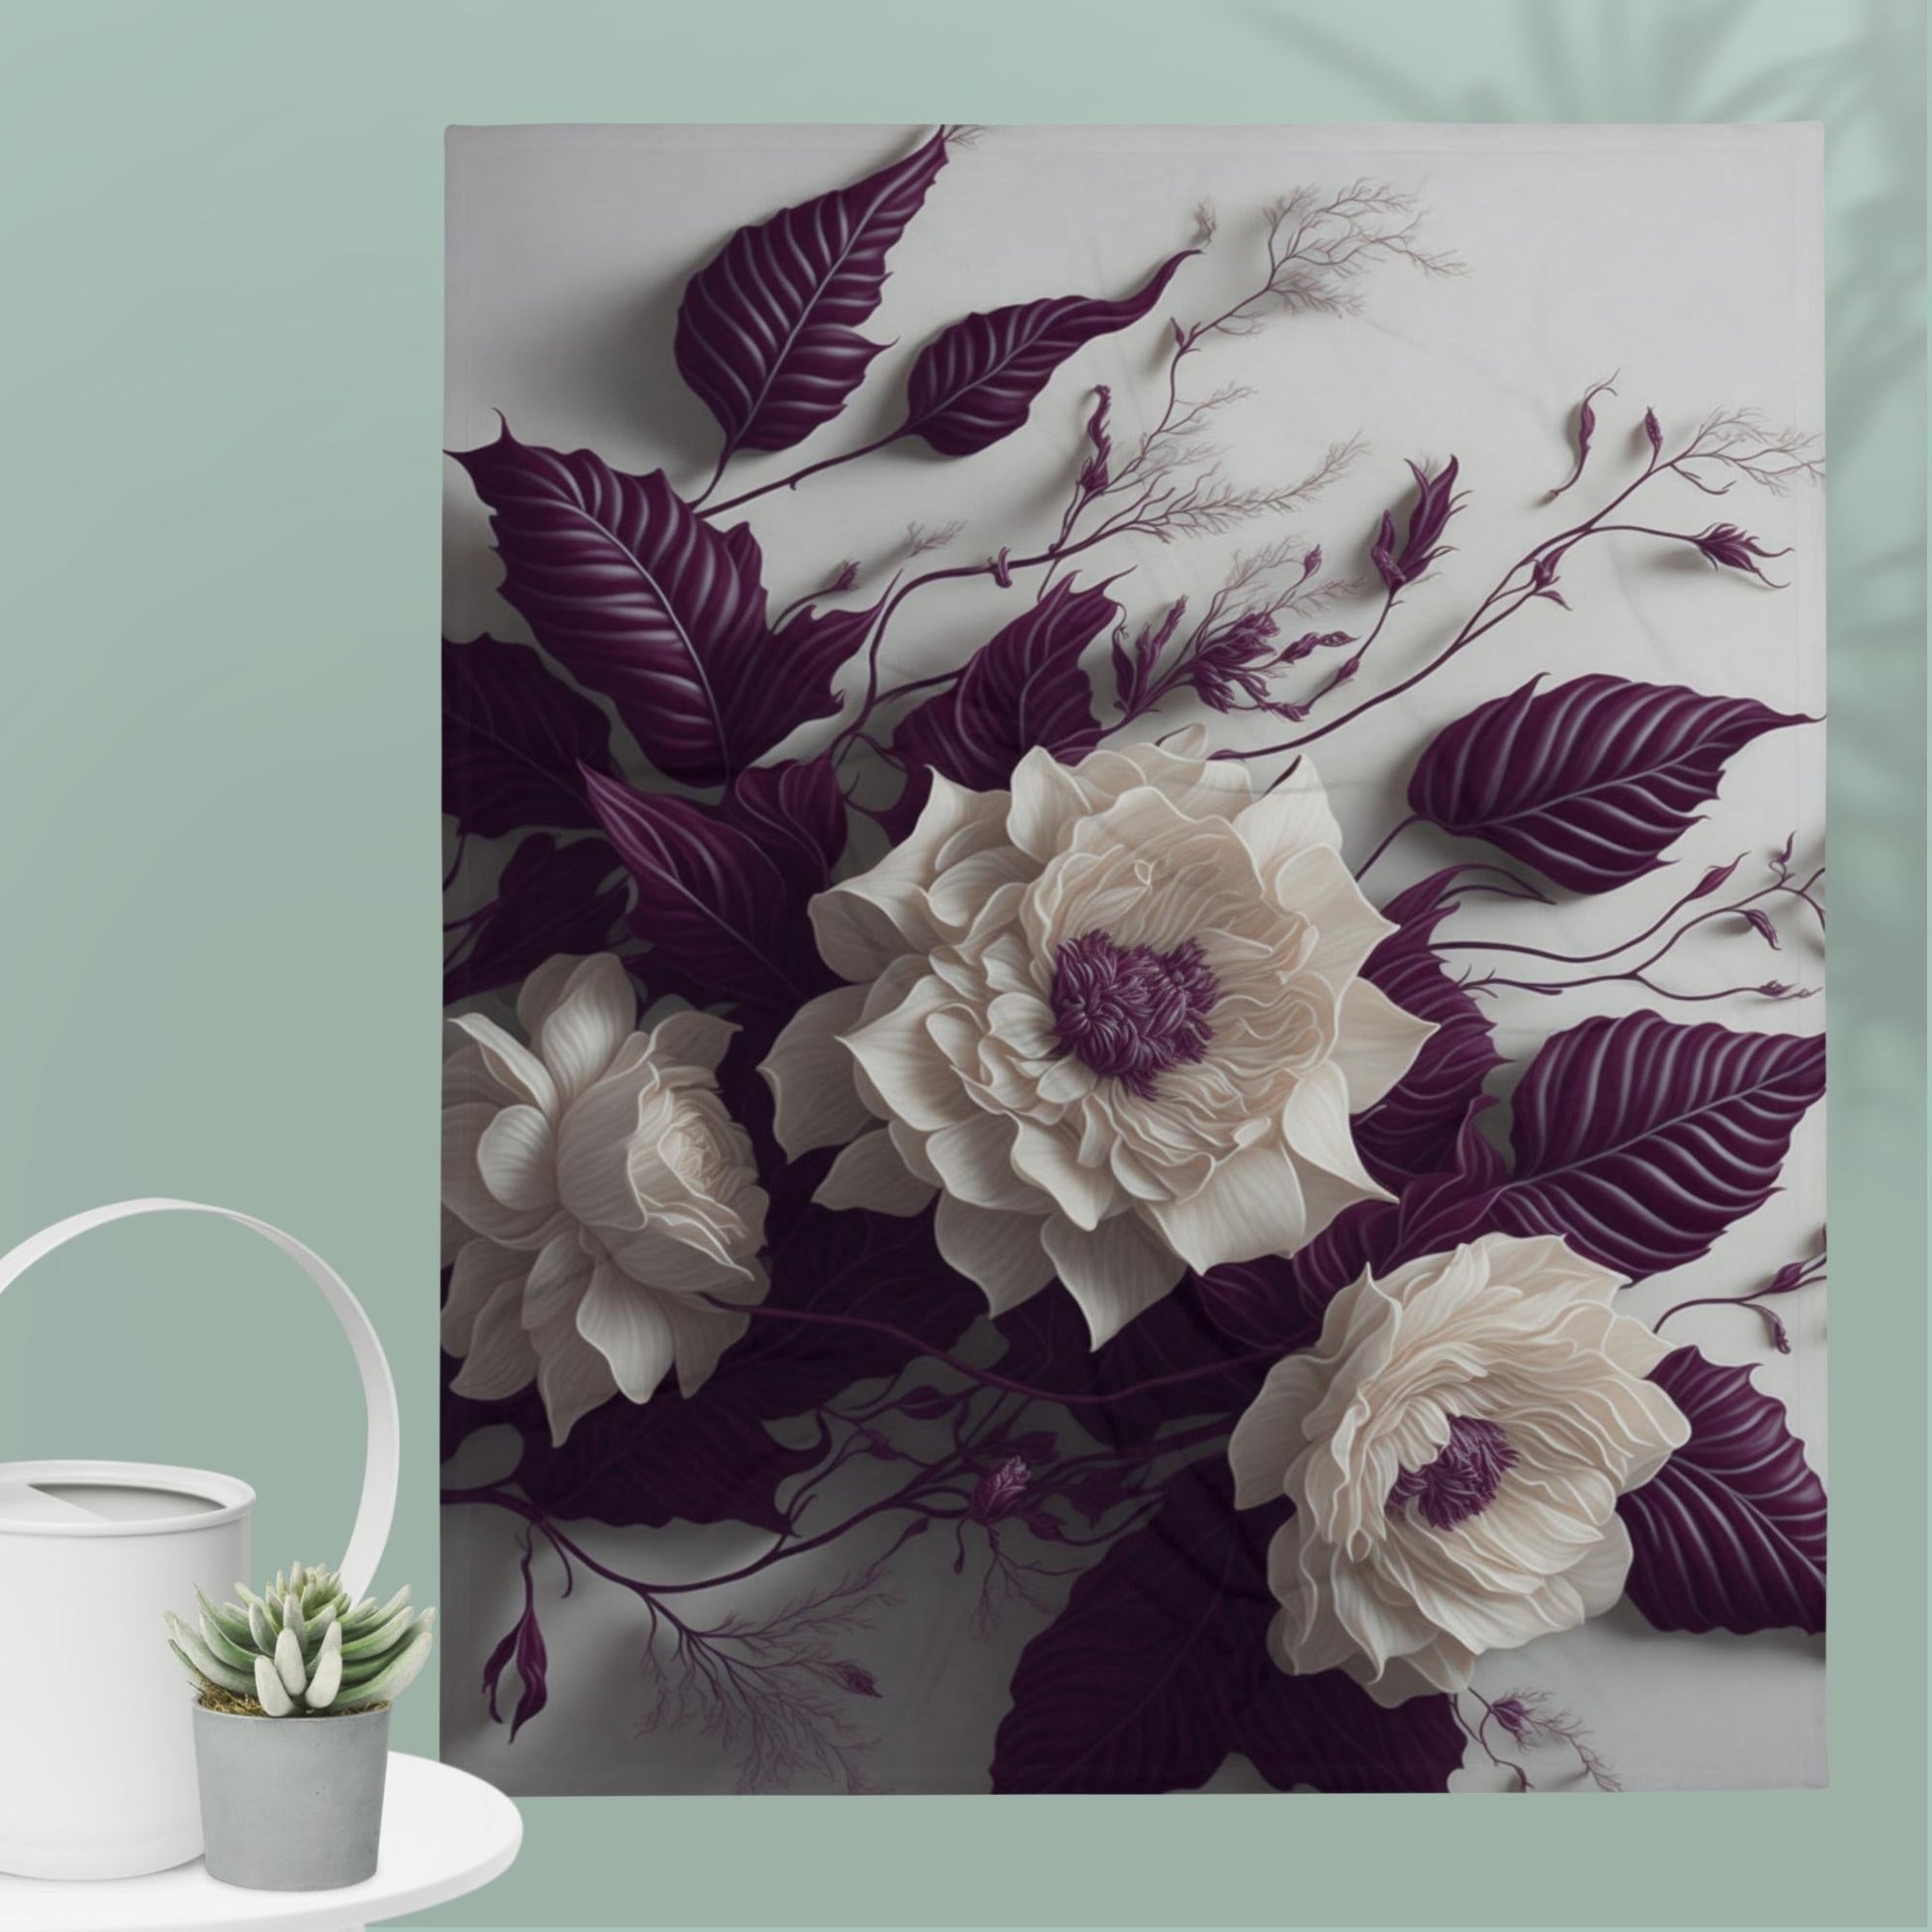 Enchanting Elegance: Ivory and Burgundy Flowers Throw Blanket Collection-THROW BLANKET-50″×60″-Vintage Elegance In Bloom-mysticalcherry